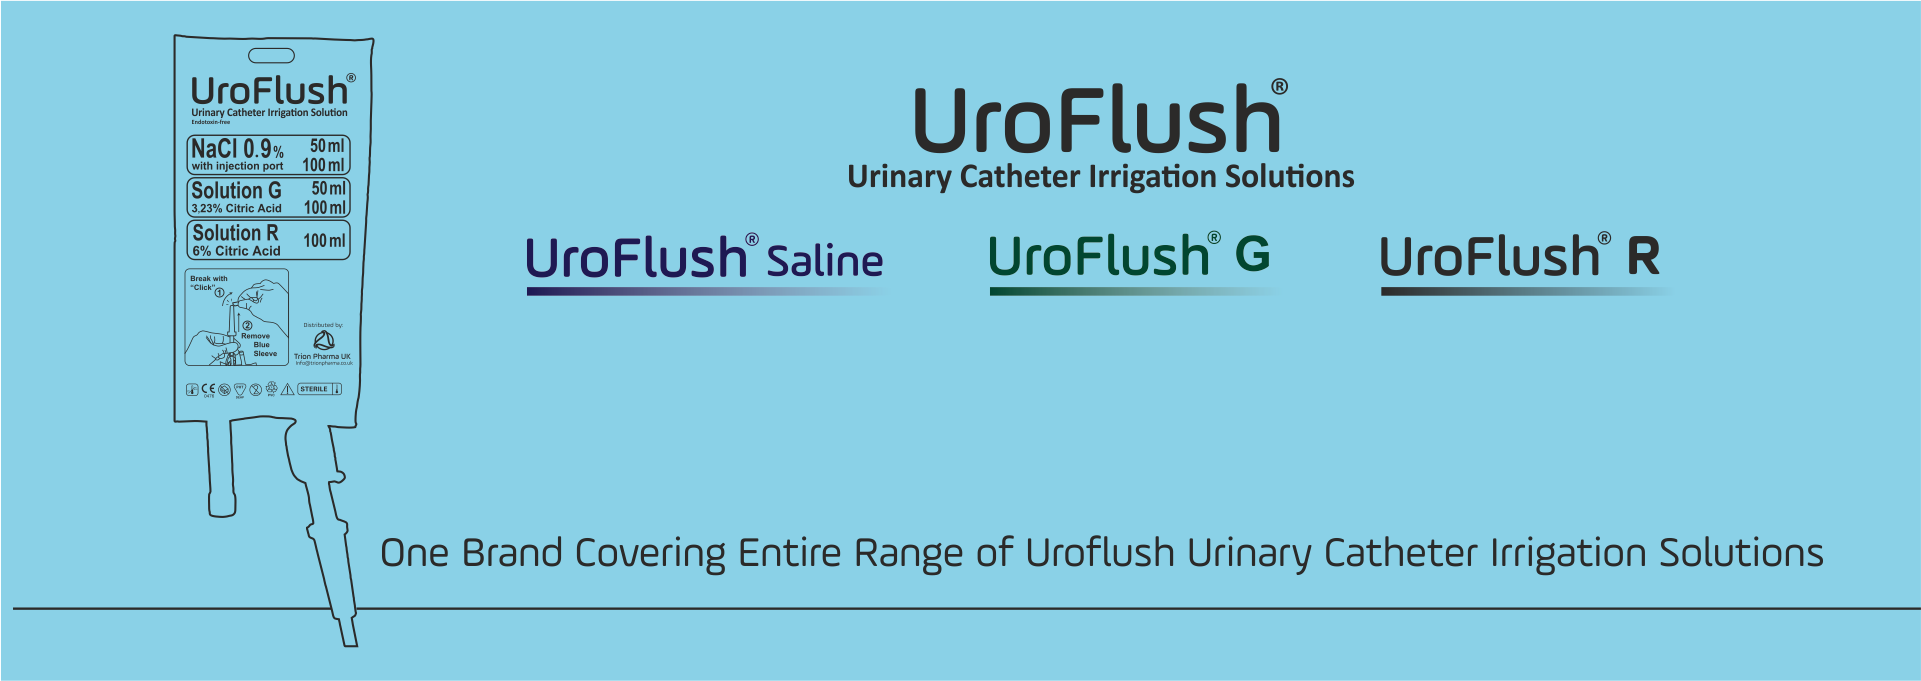 UroFlush